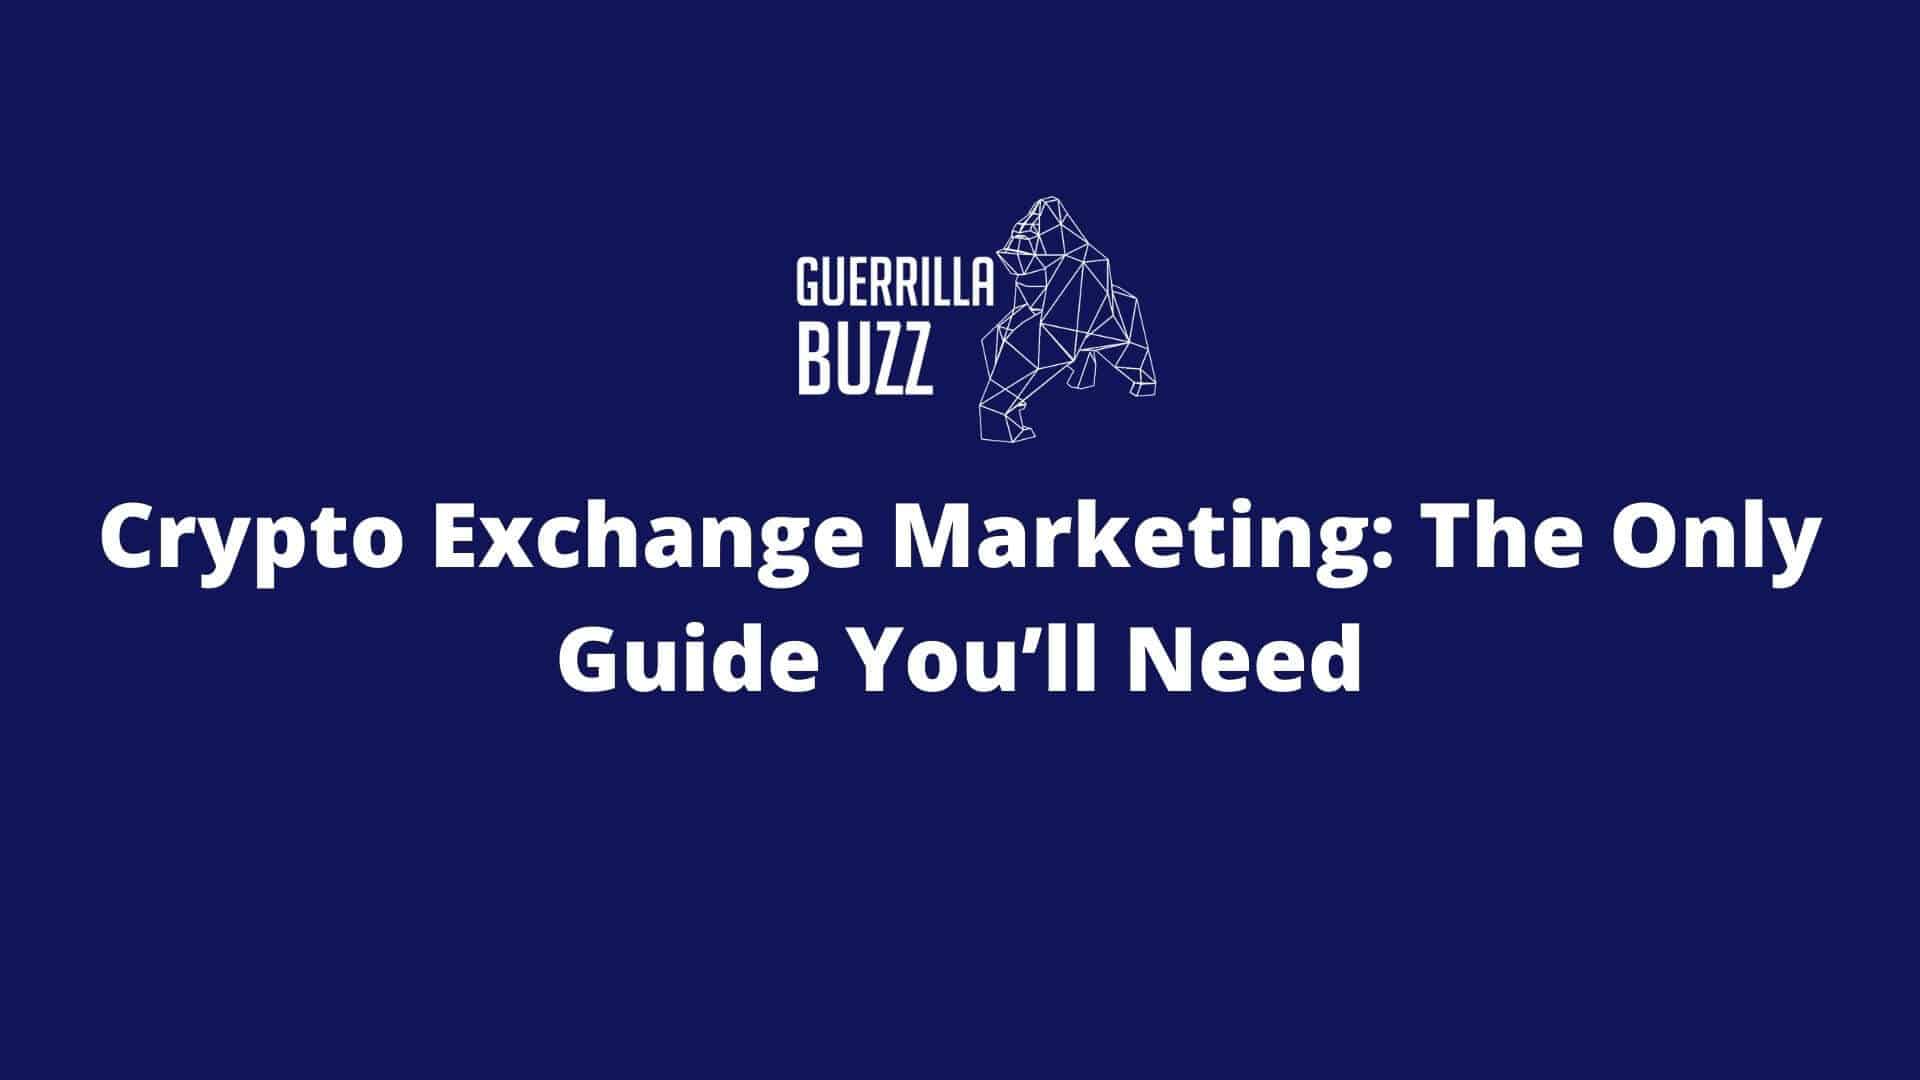 Crypto Exchange Marketing GuerrillaBuzz